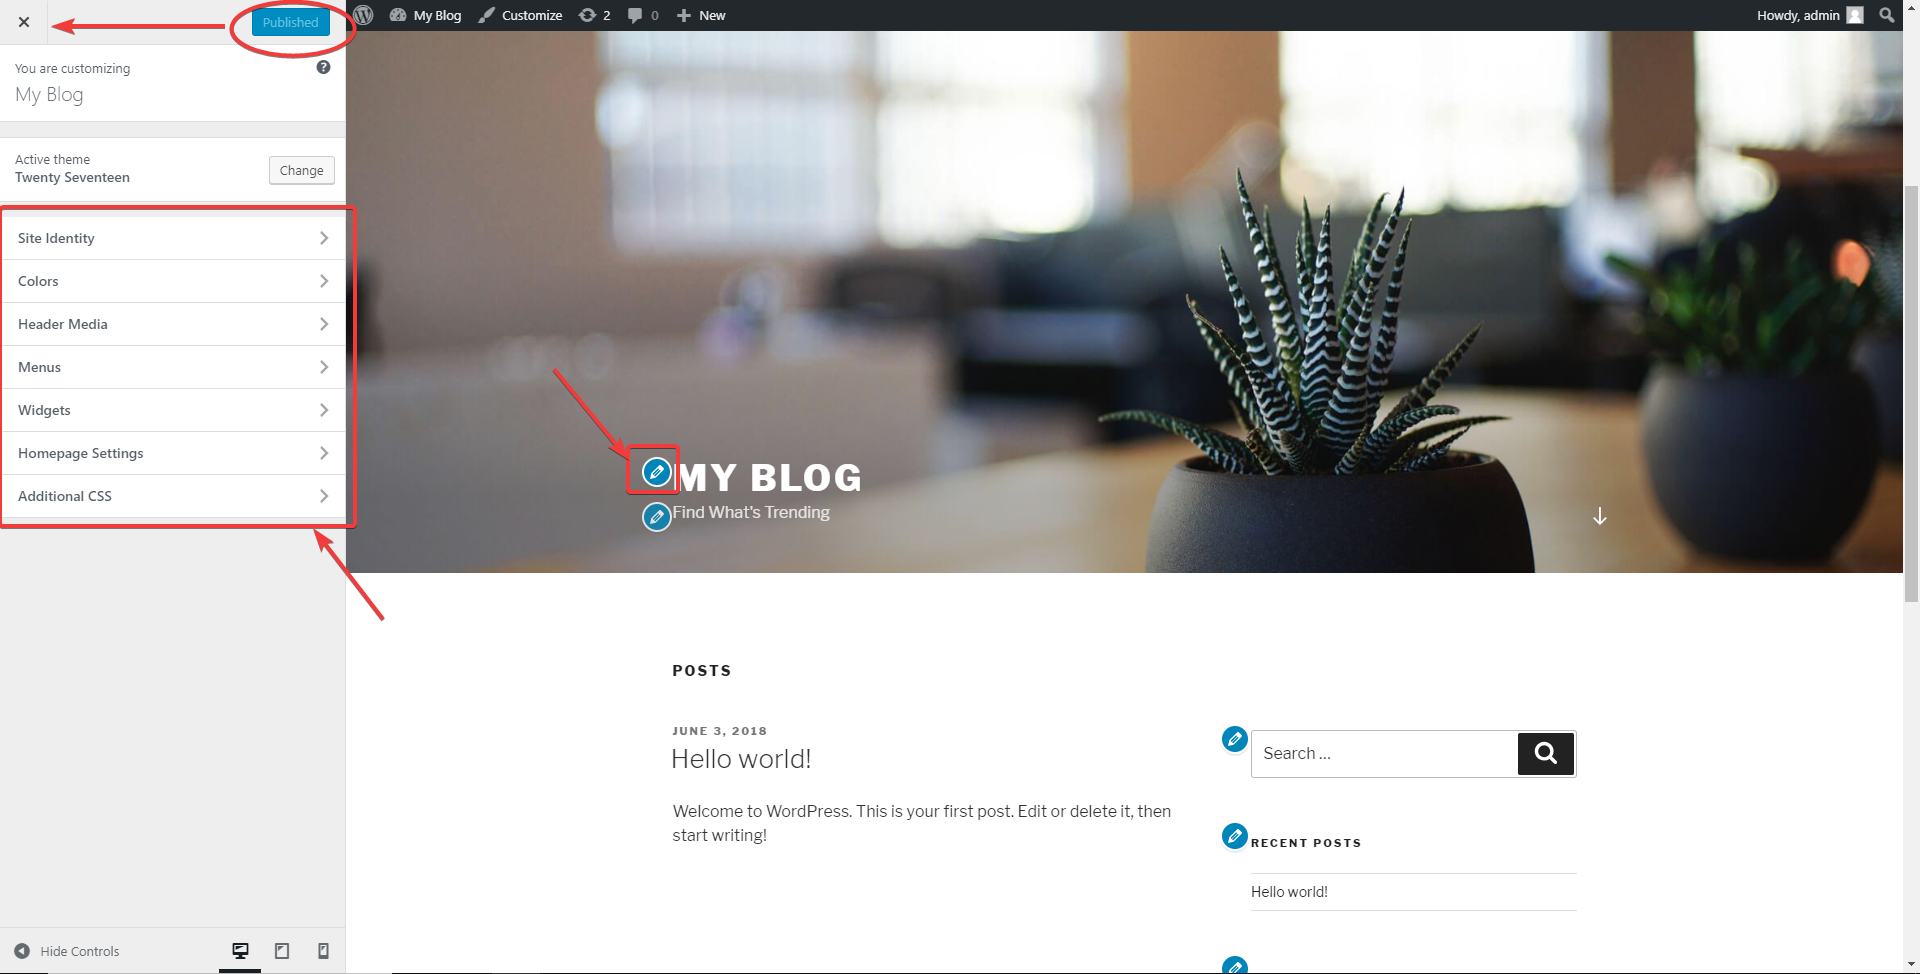 Blog homepage WordPress